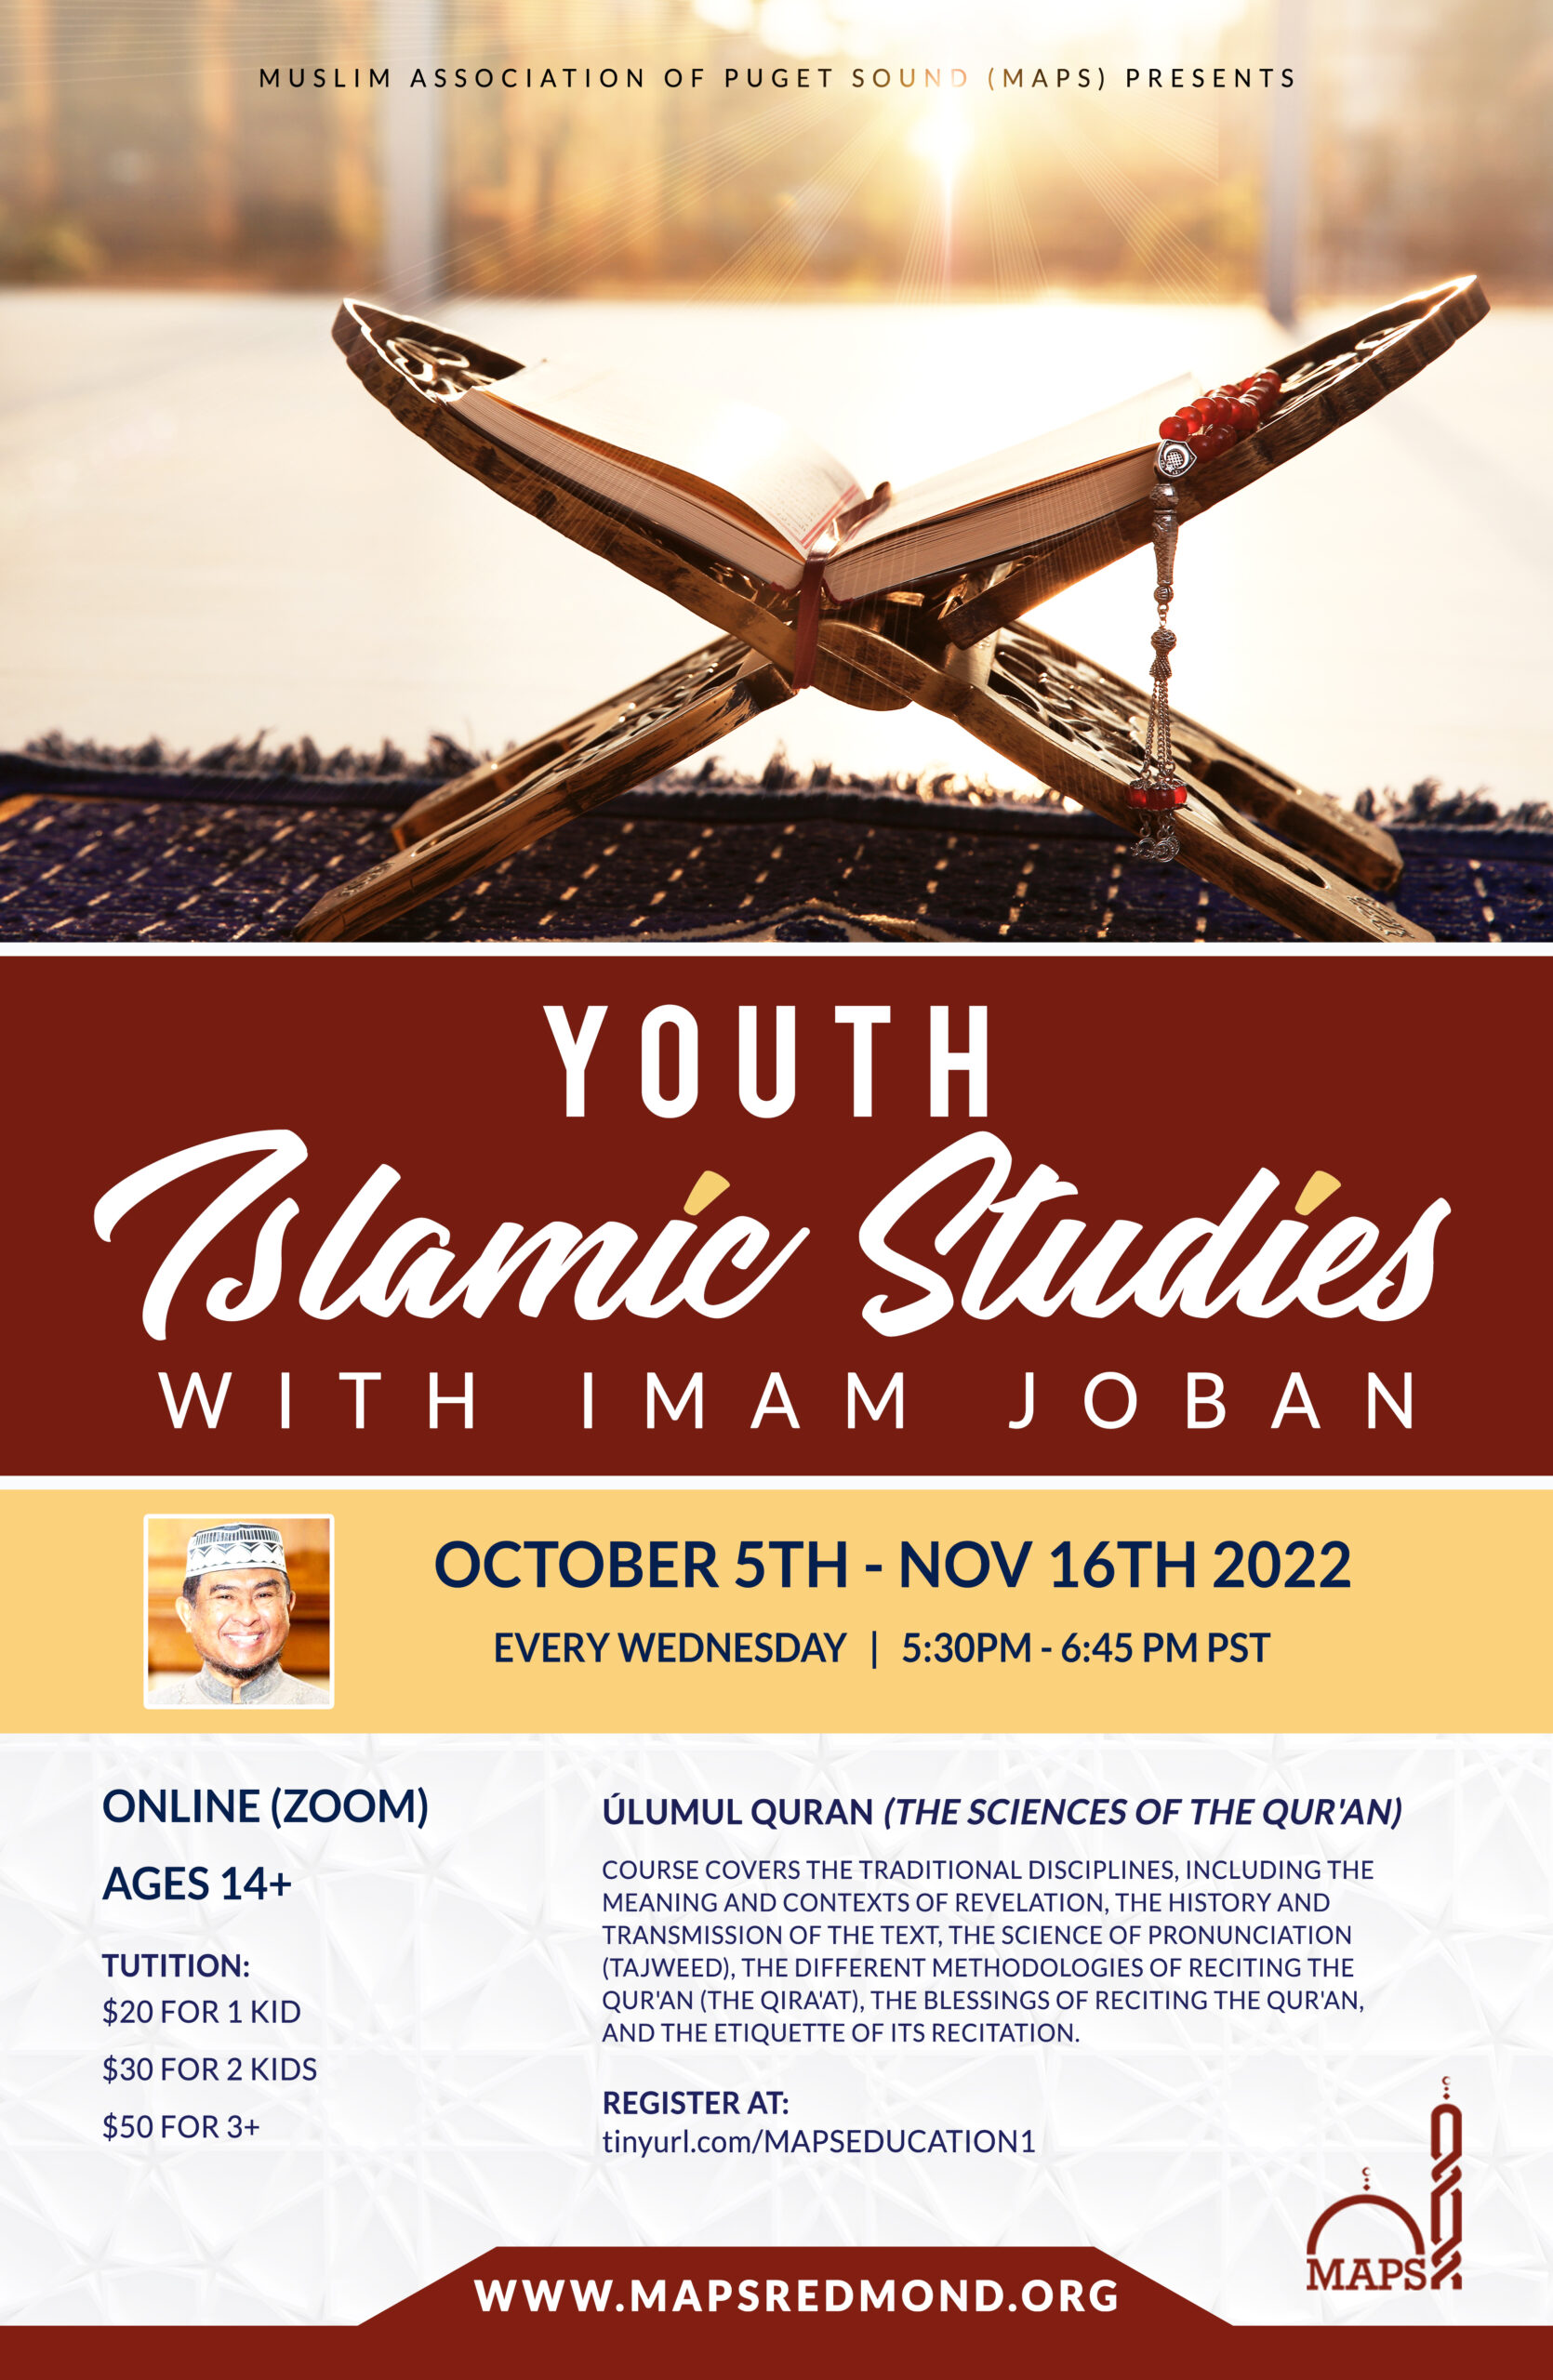 Youth Islamic Studies with Imam Joban